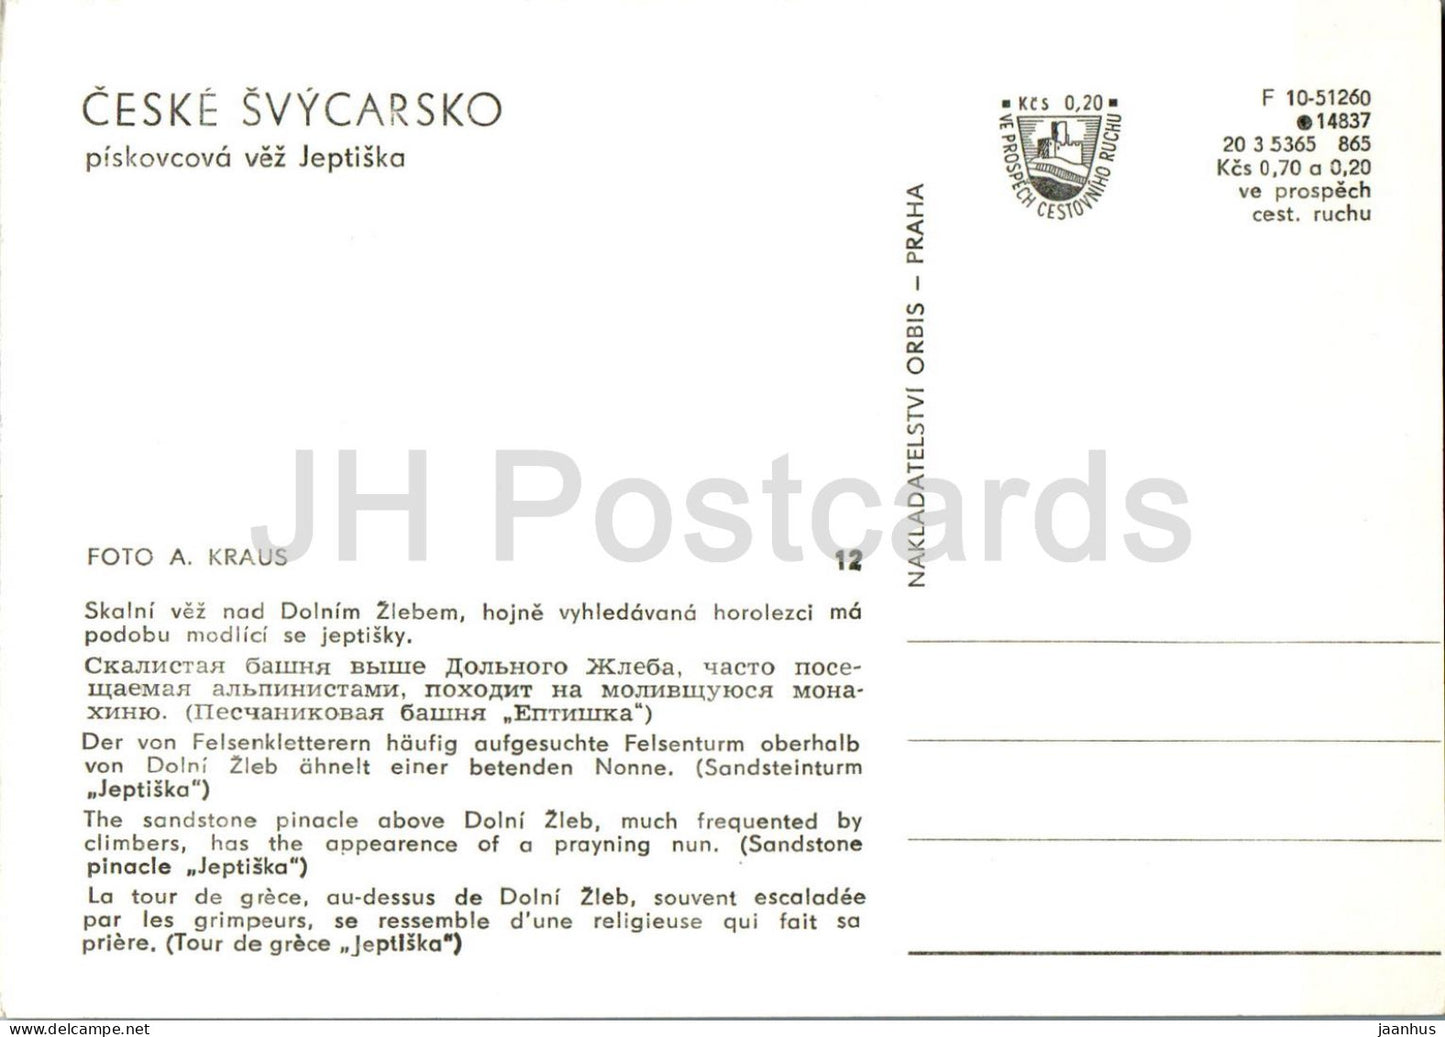 Ceske Svycarsko - Sandstone pinacle Jeptiska - 12 - Czech Repubic - Czechoslovakia - unused